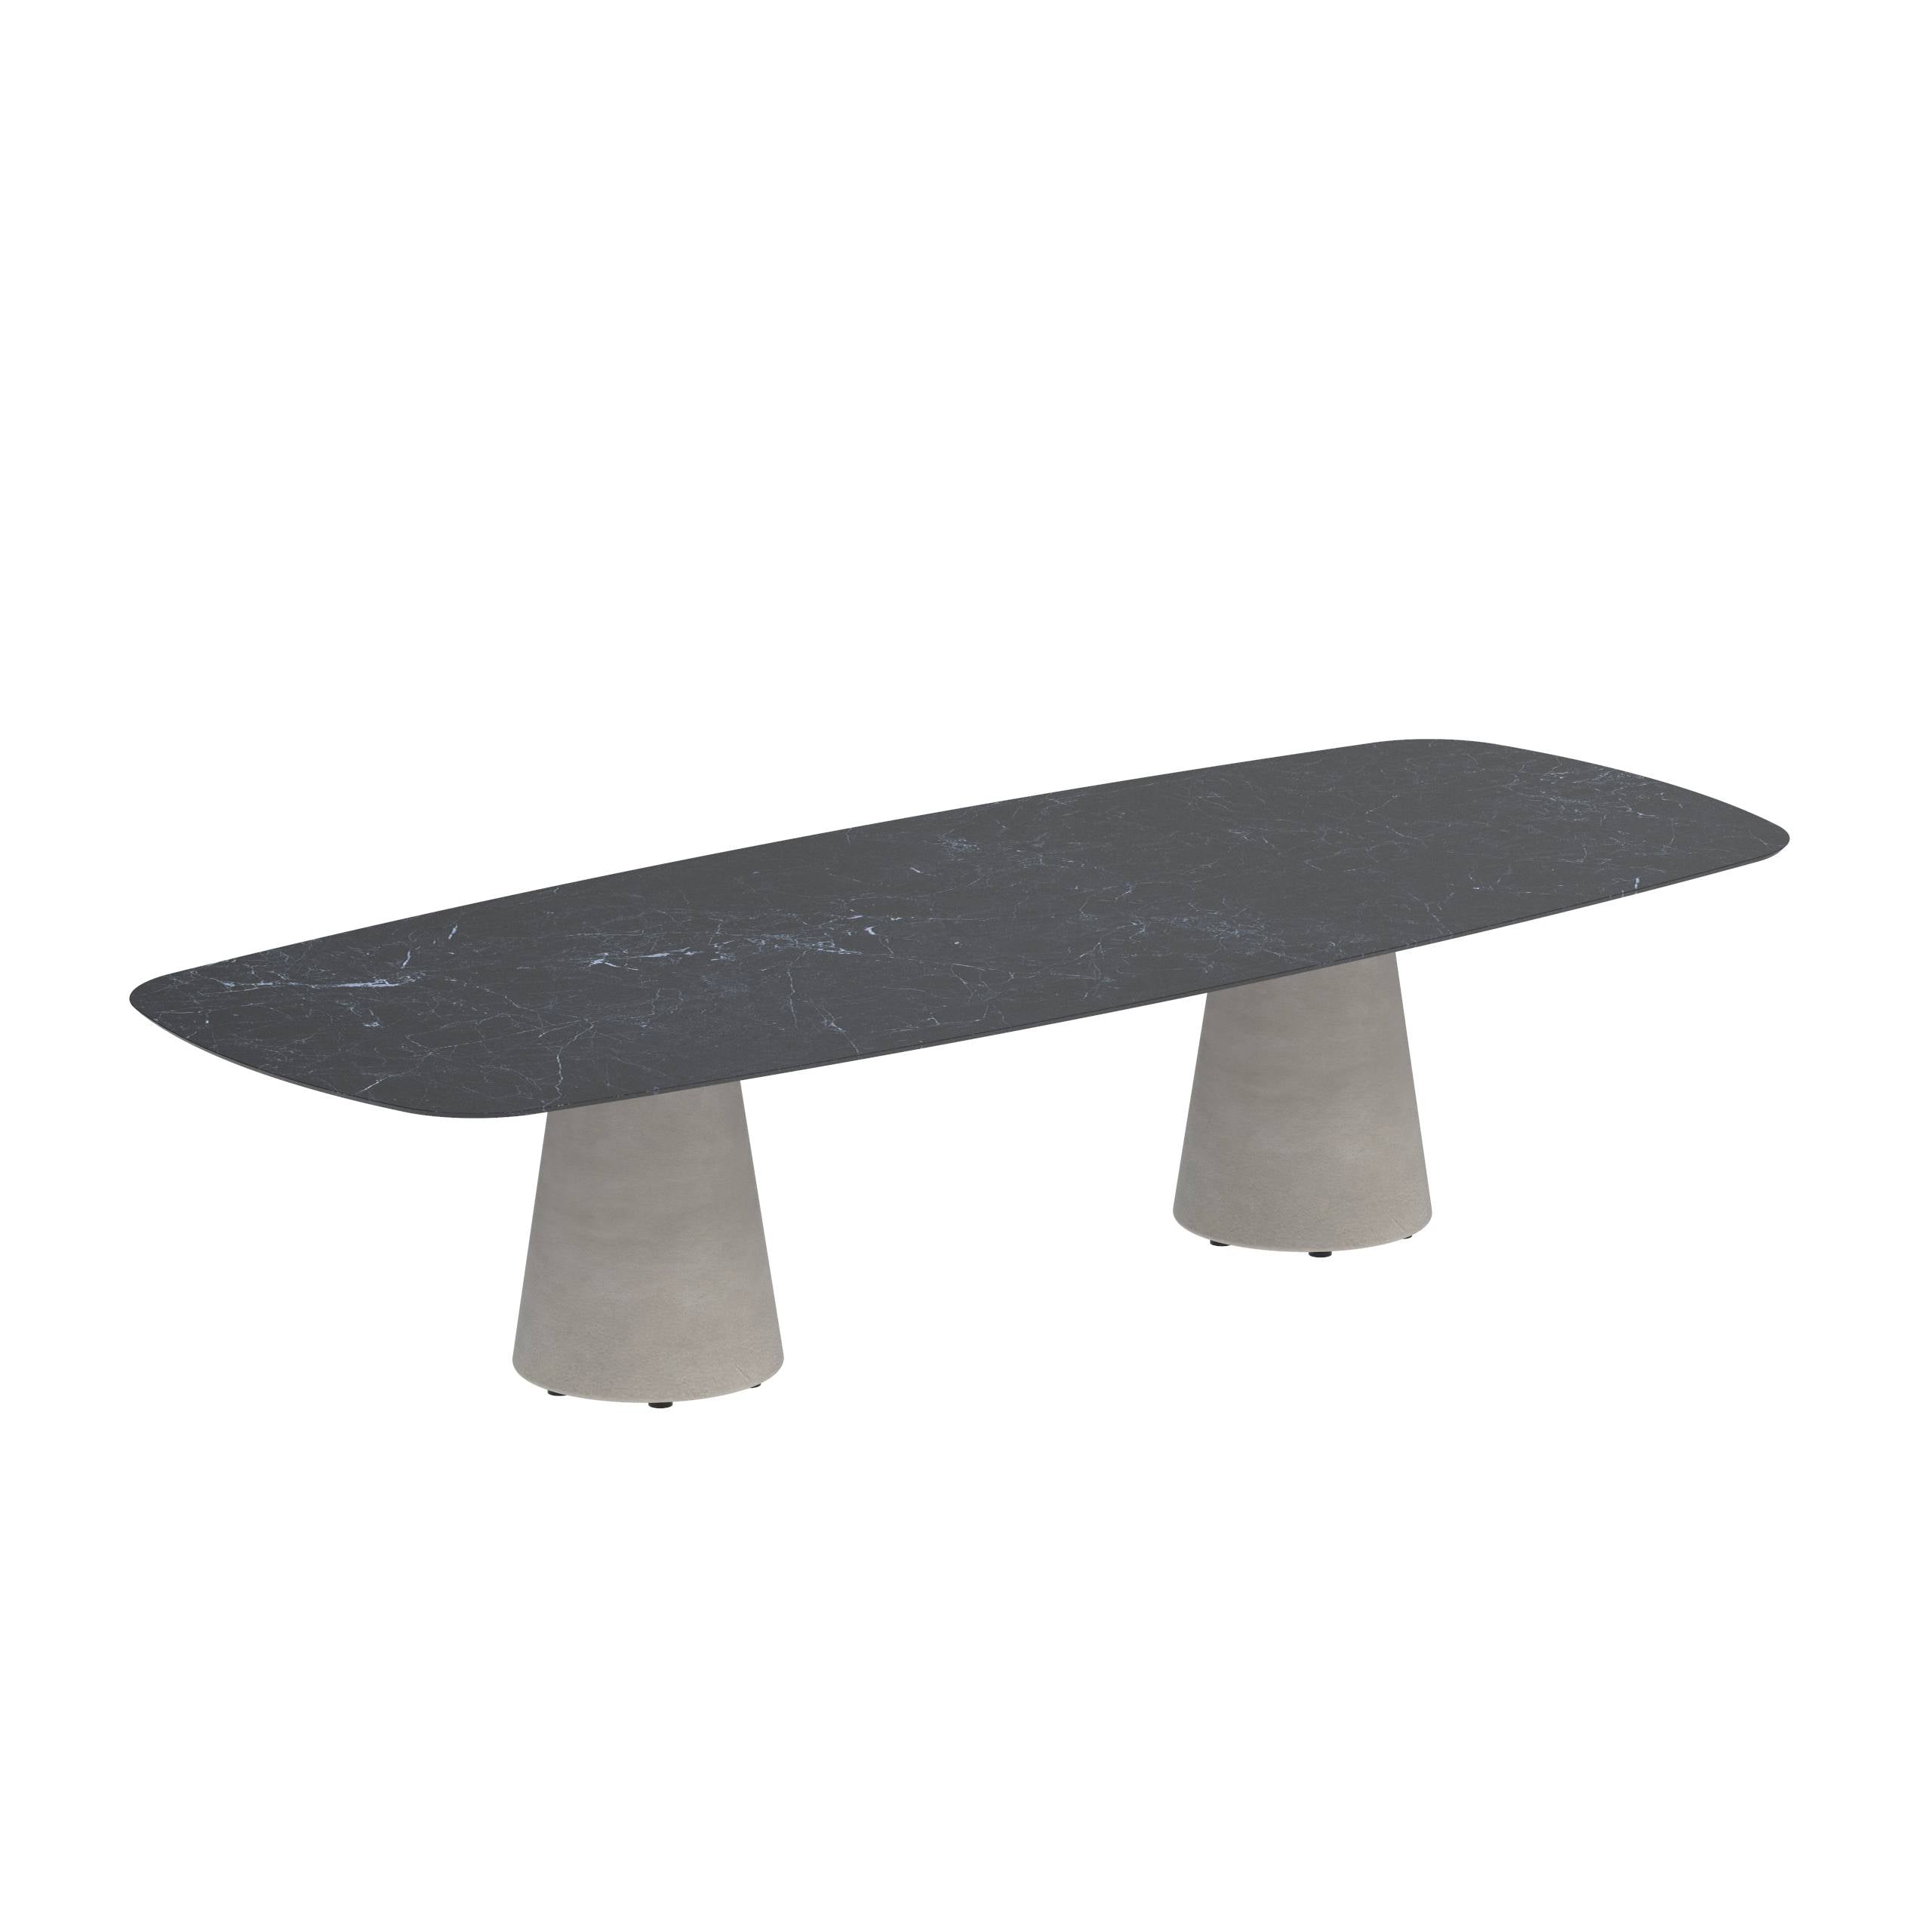 Conix Table 300x120 Cm Low Dining Legs Concrete Cement Grey - Table Top Ceramic Nero Marquina